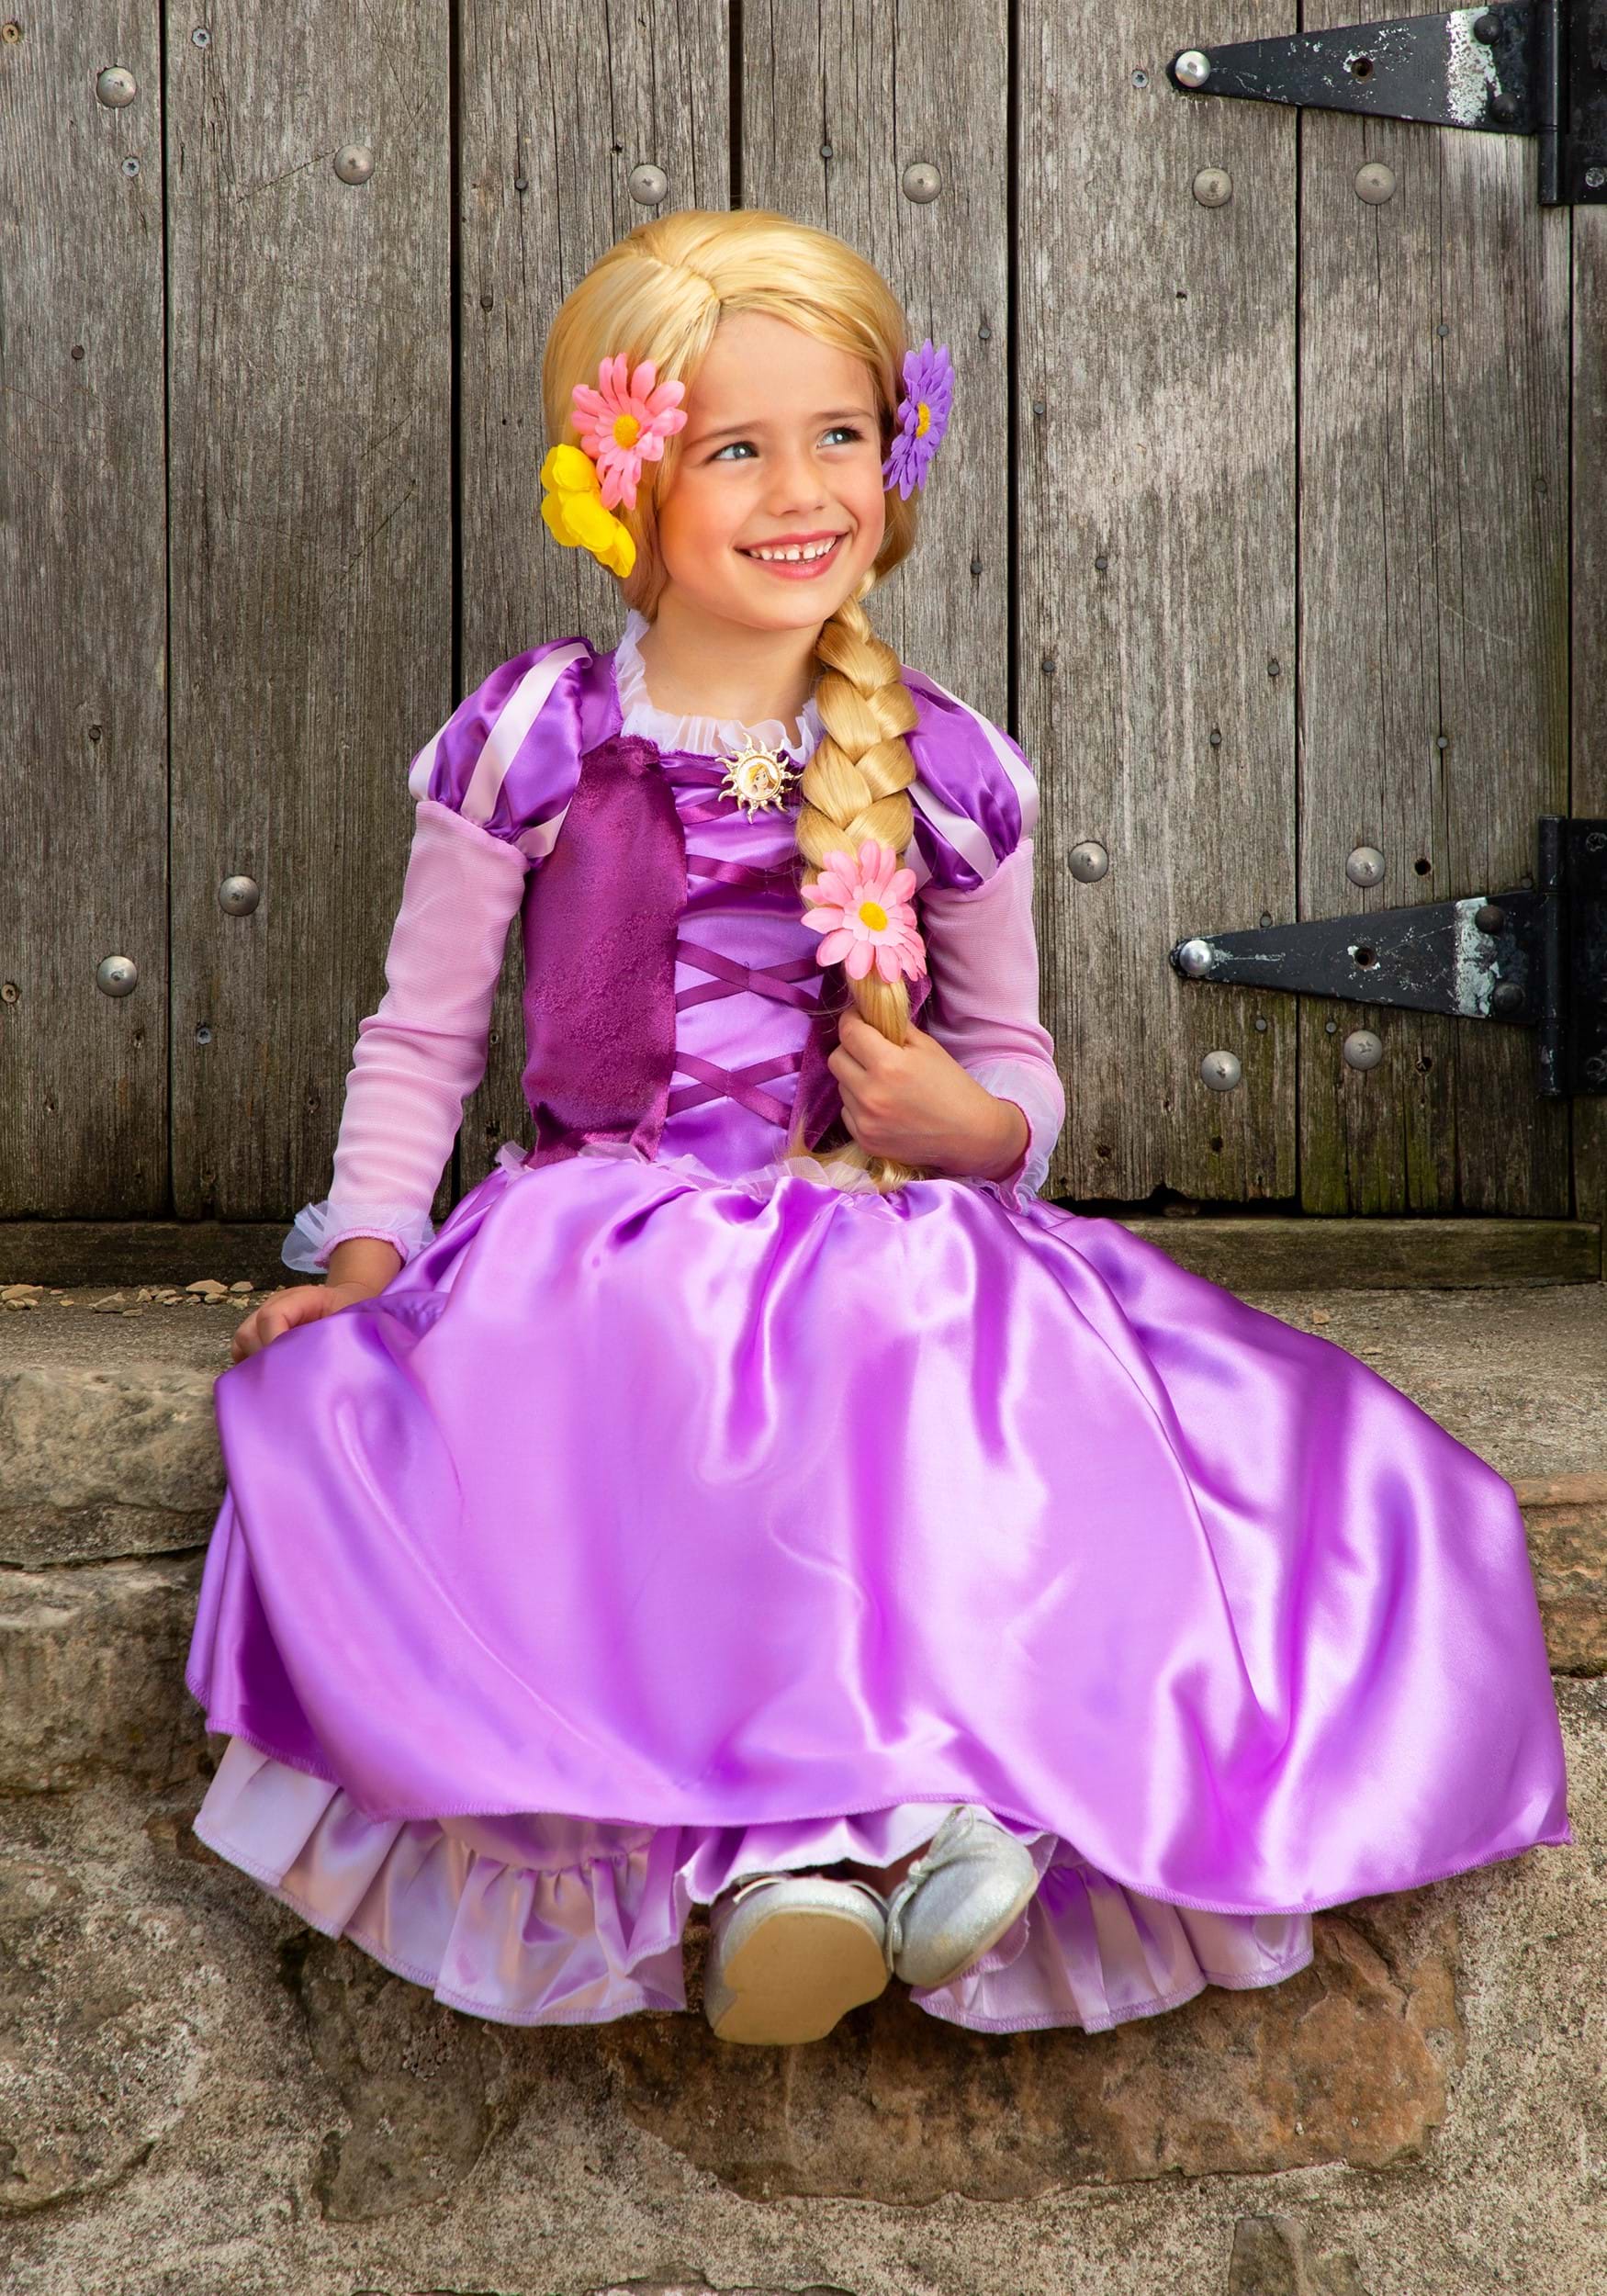 Kids Disney Rapunzel Standard Costume